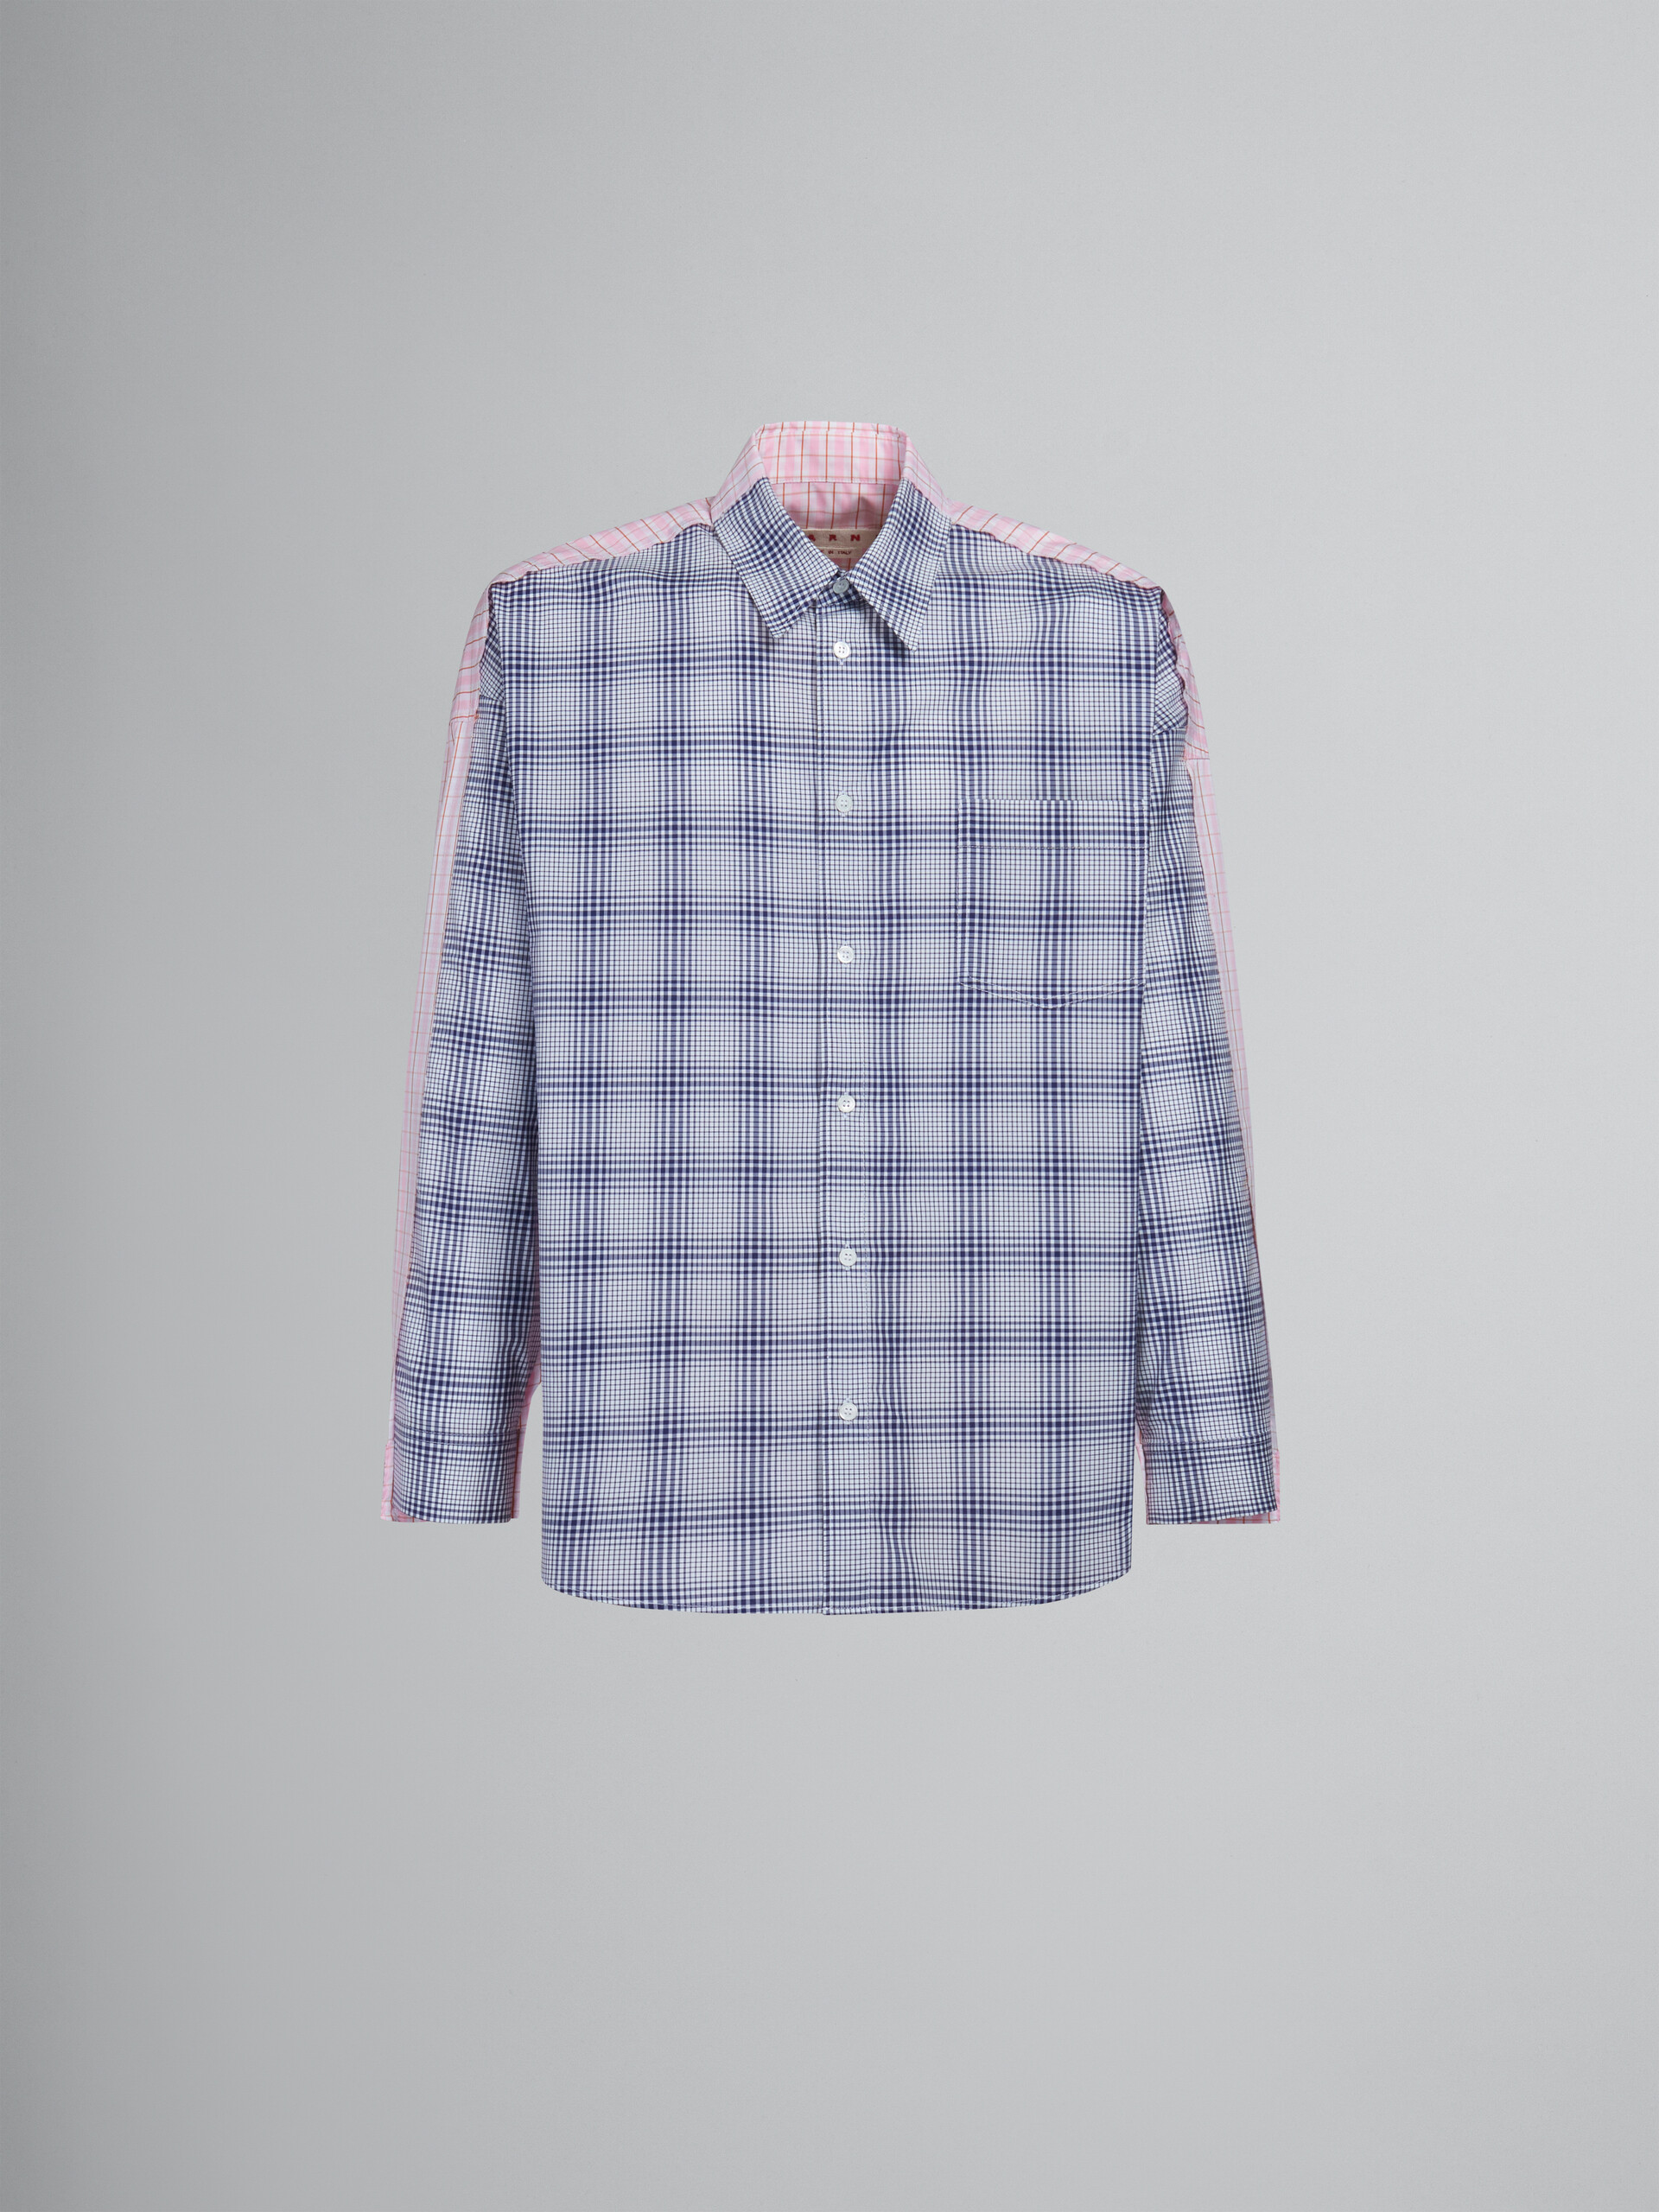 Blue bio poplin shirt with contrasting checks - Shirts - Image 1